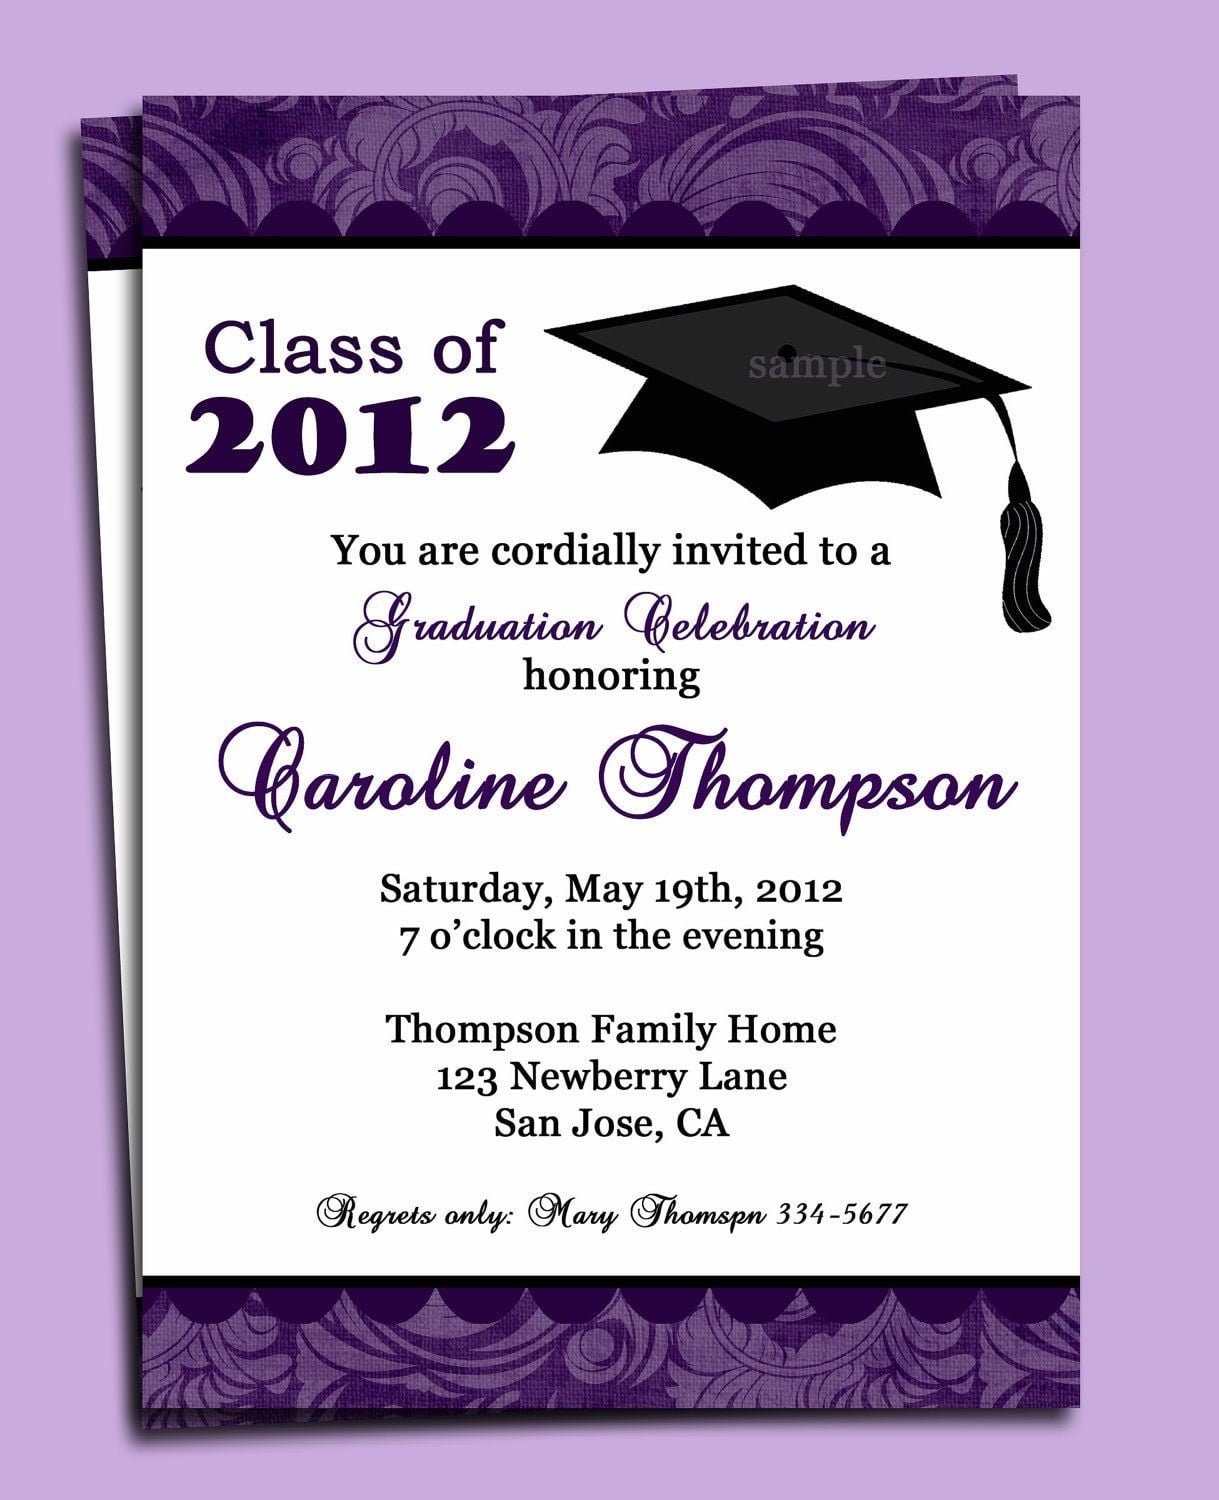 graduation-party-invitations-graduation-invitations-invitation-related